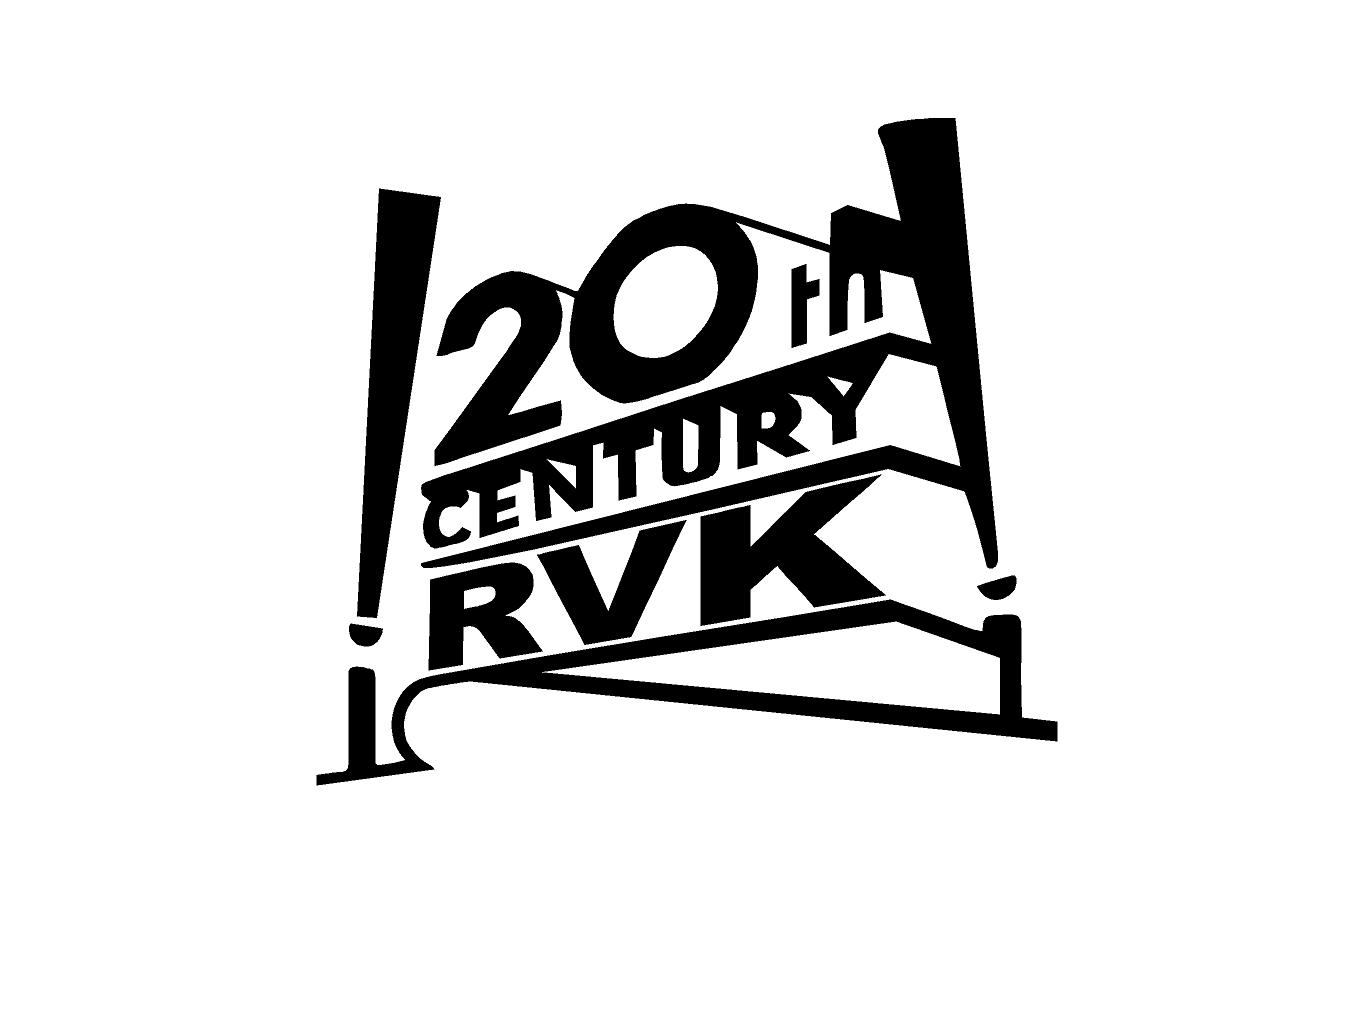 20th century Reykjavík